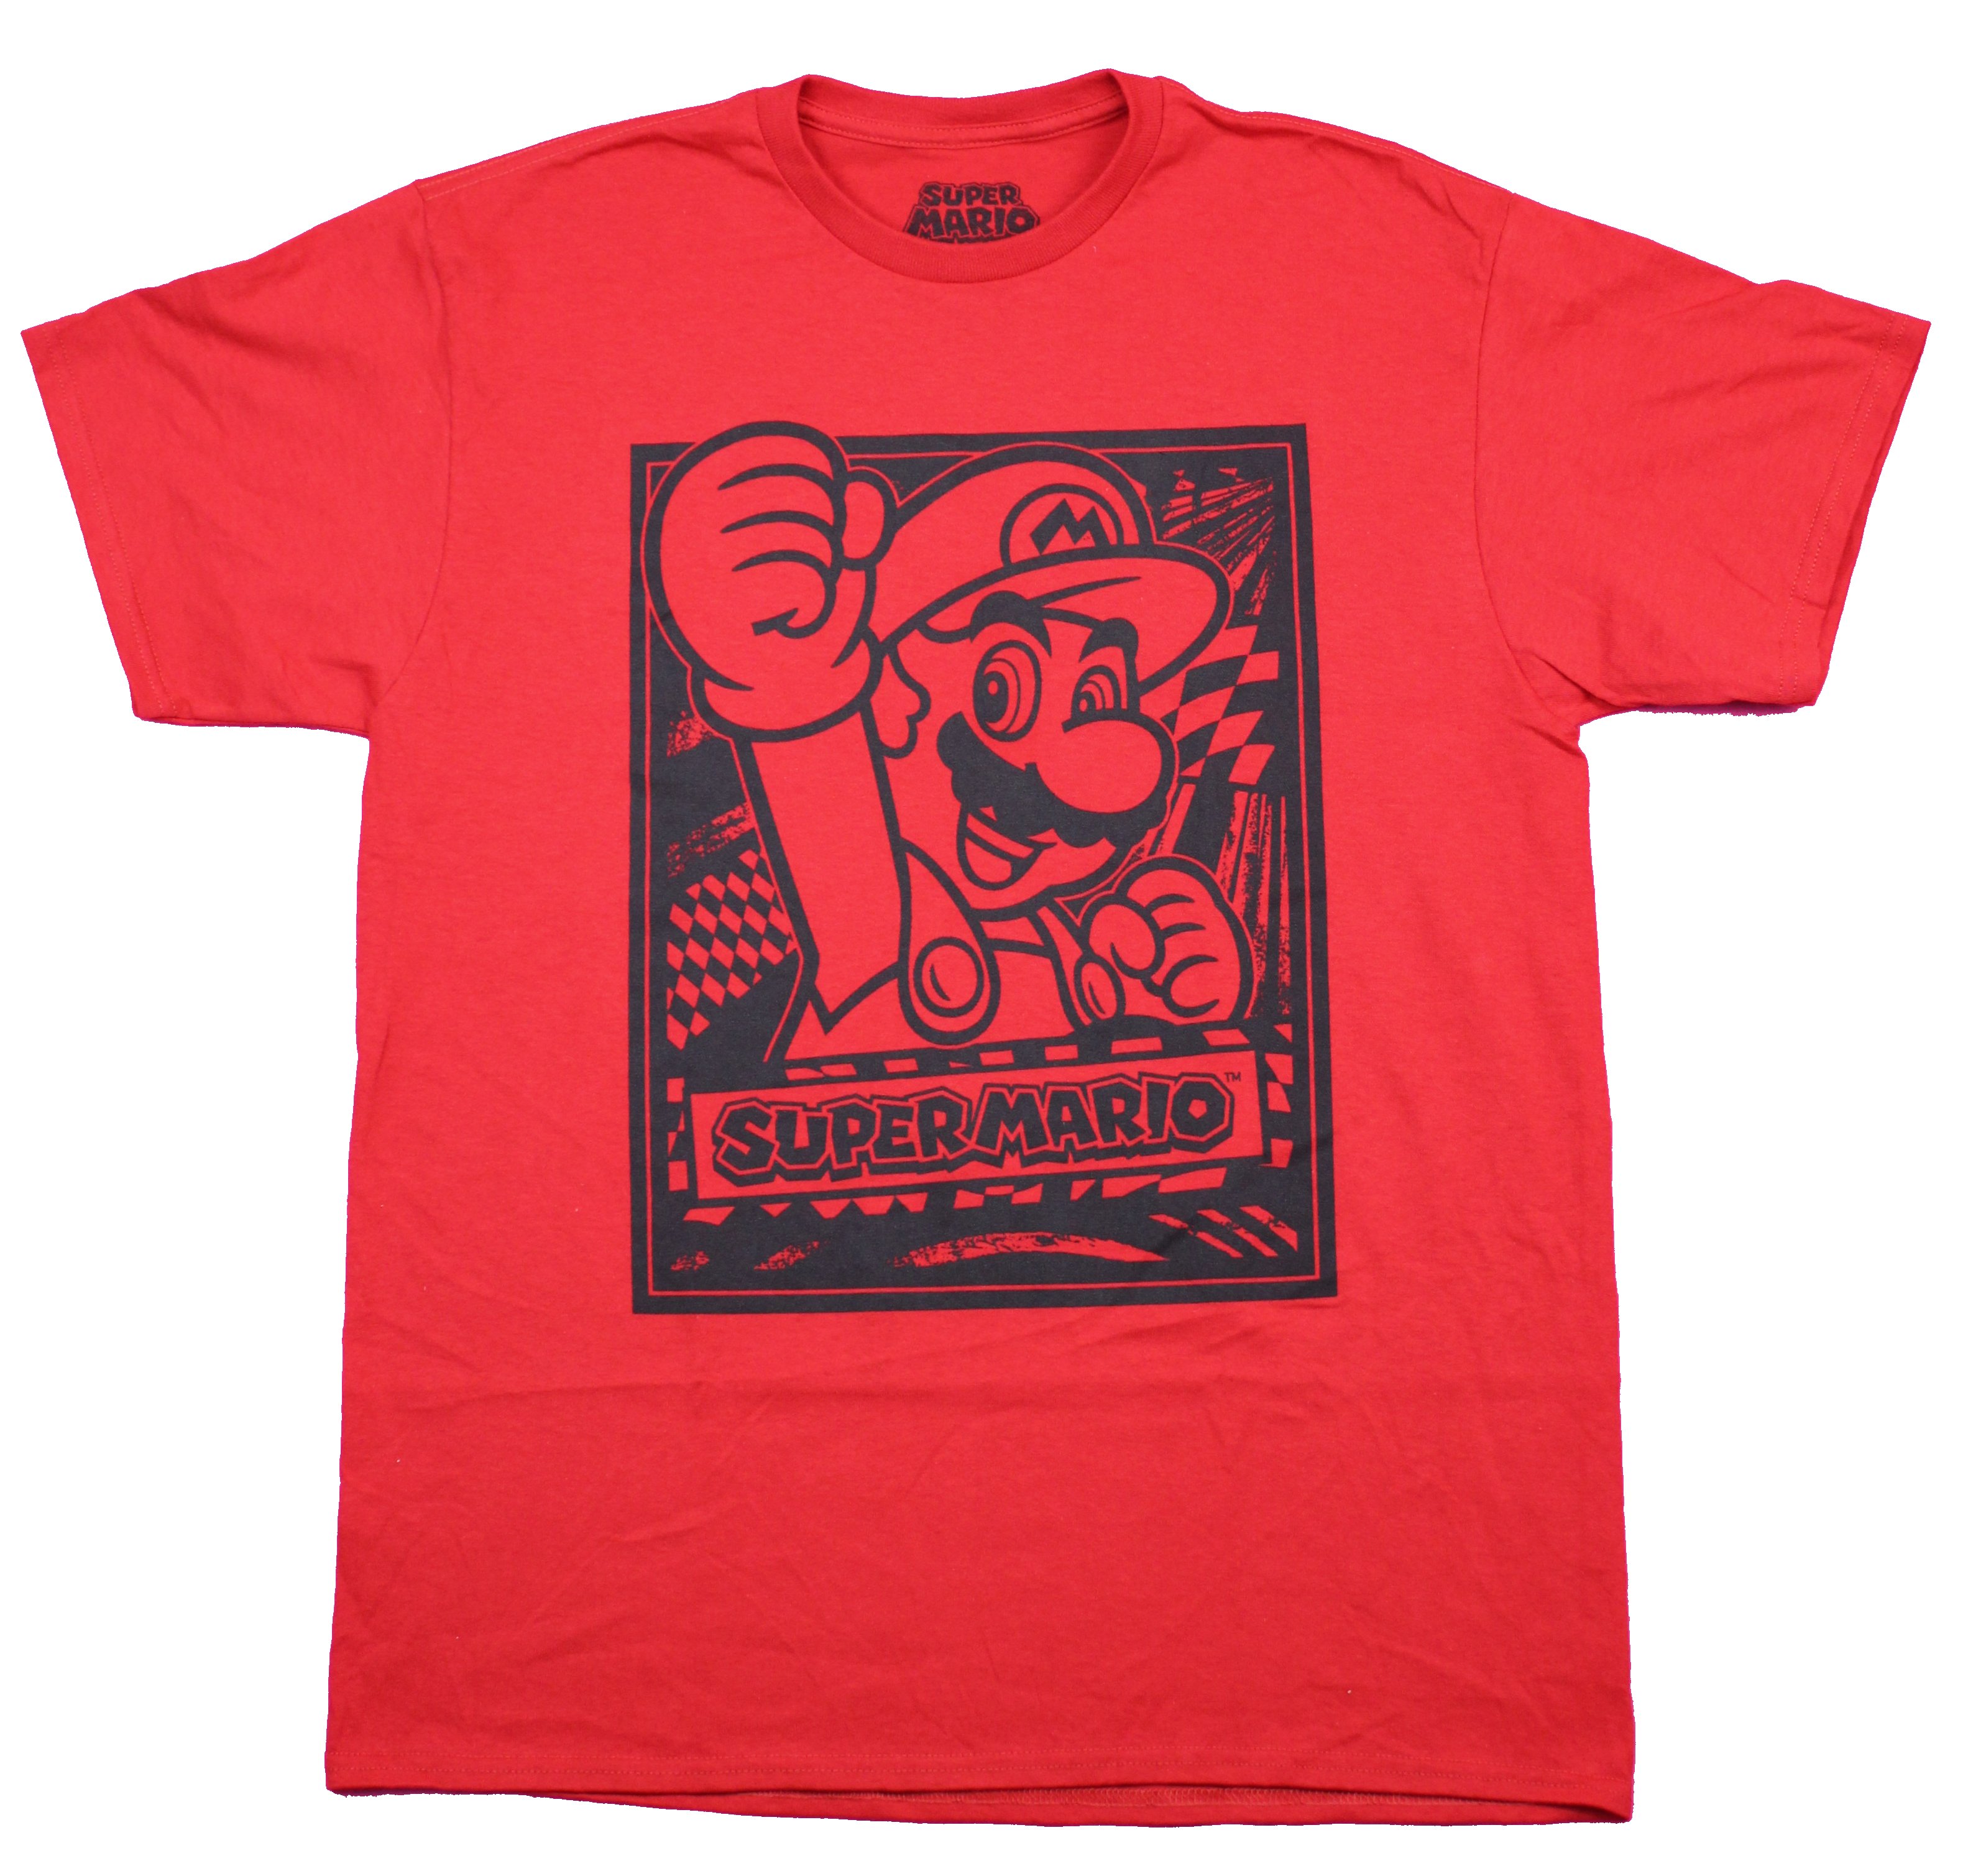 Super Mario Brothers Mens T-Shirt - Mario Black Woodcut Style Image | eBay